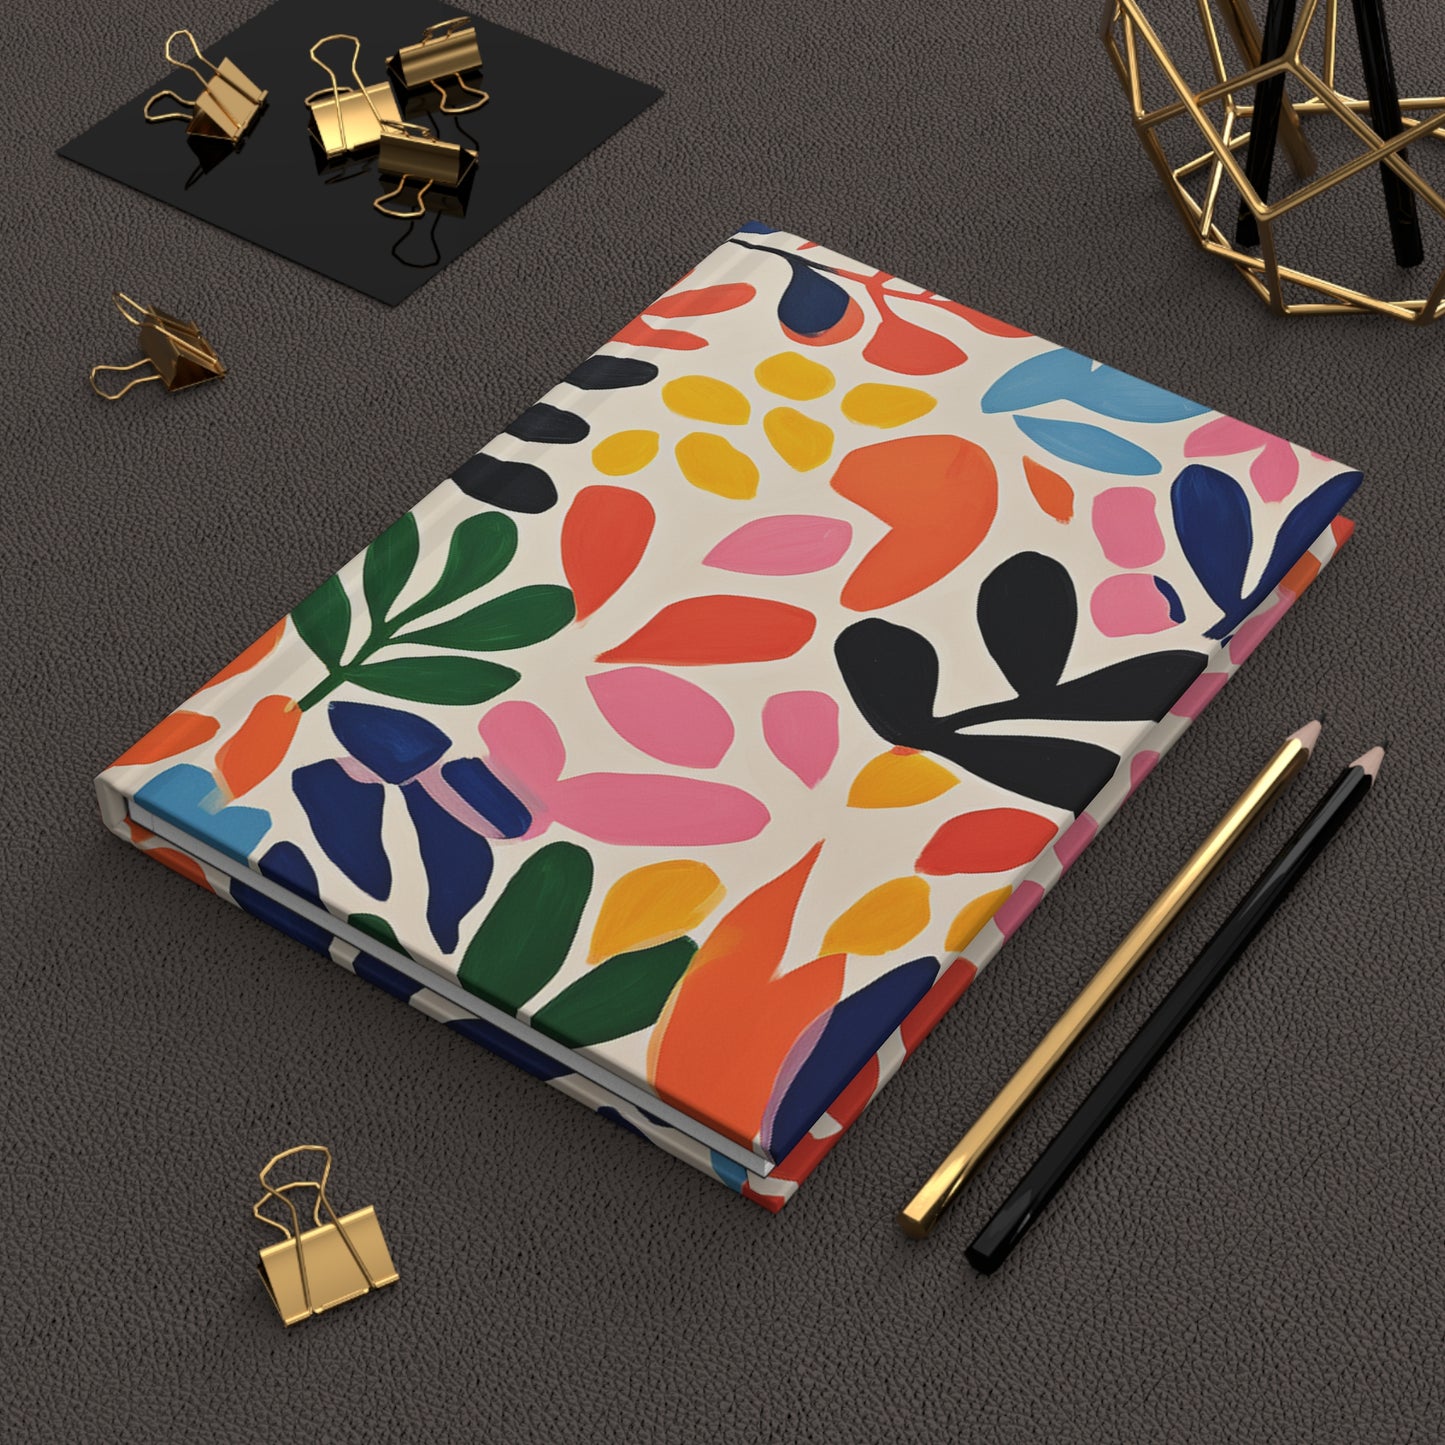 Matisse Playbook - Journal